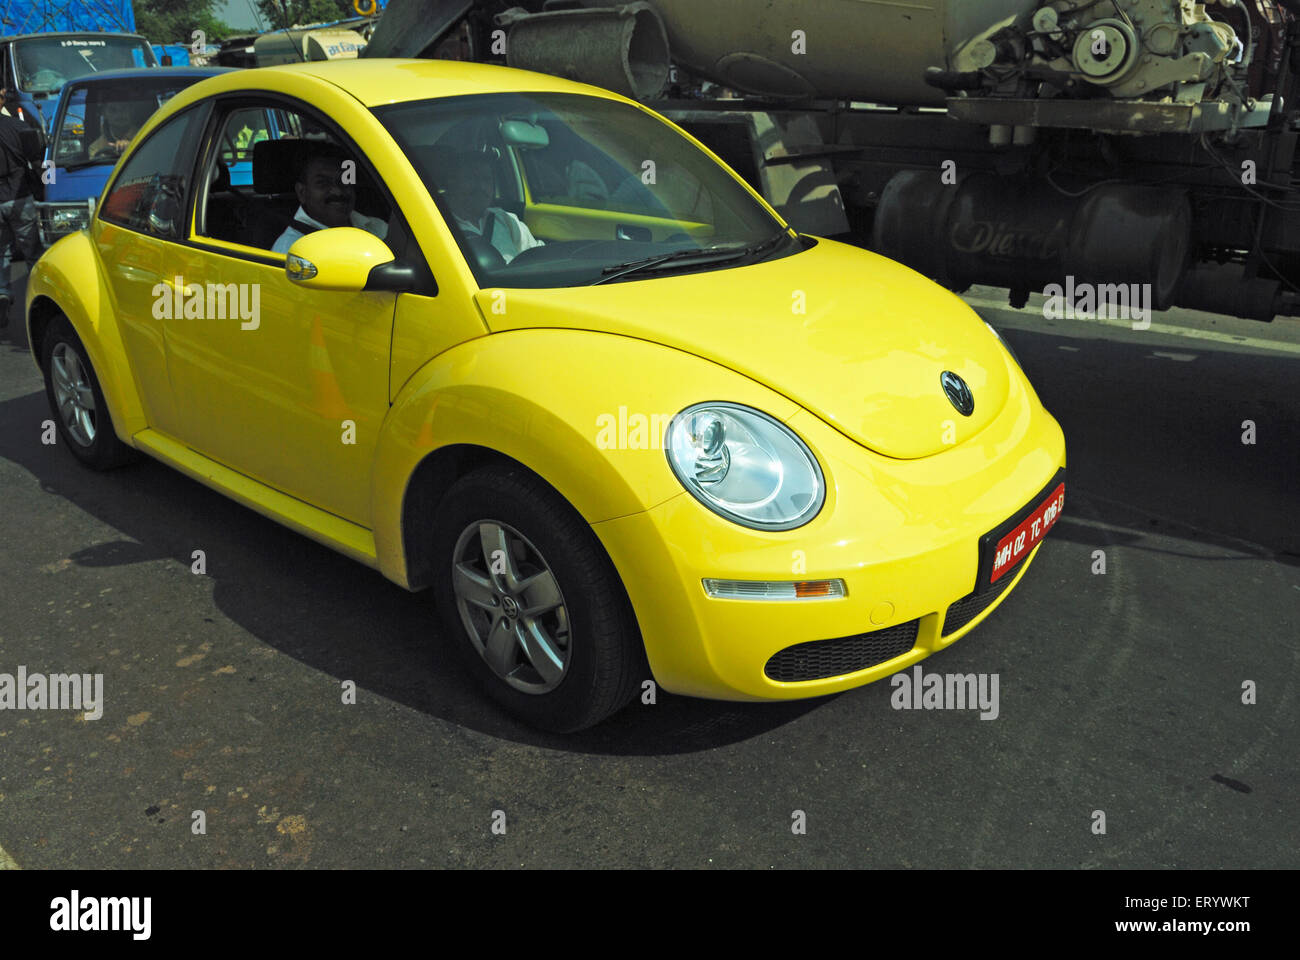 Volkswagen Beetle und Mini Cooper gelbes Auto auf Straße; Bombay; Mumbai; Maharashtra; Indien, Asien Stockfoto